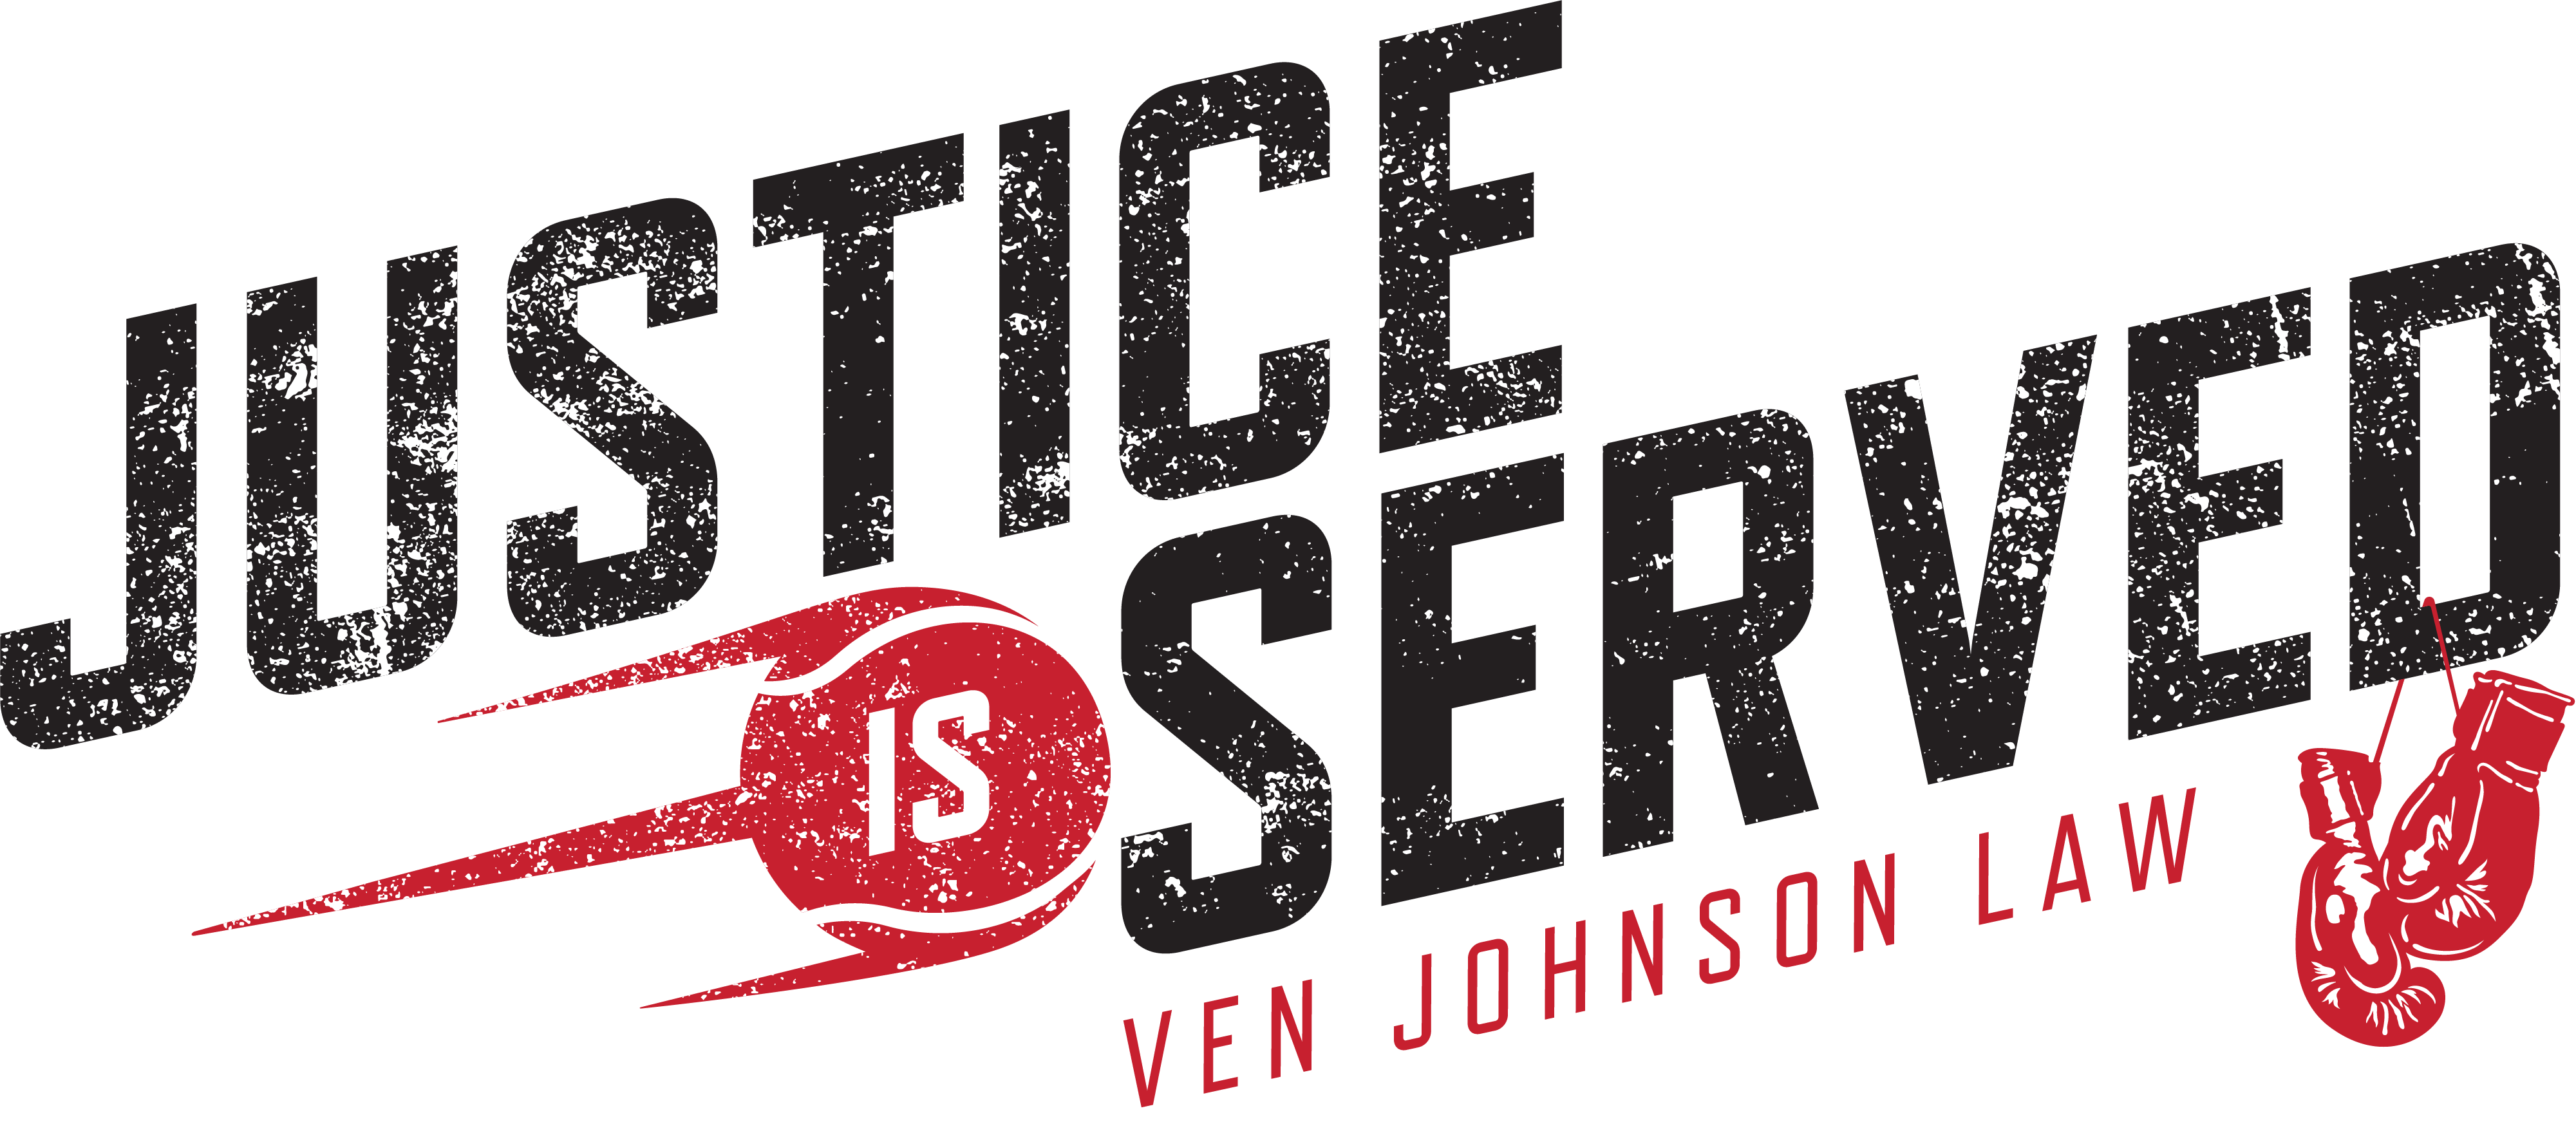 Johnson Law Justice Served Logo